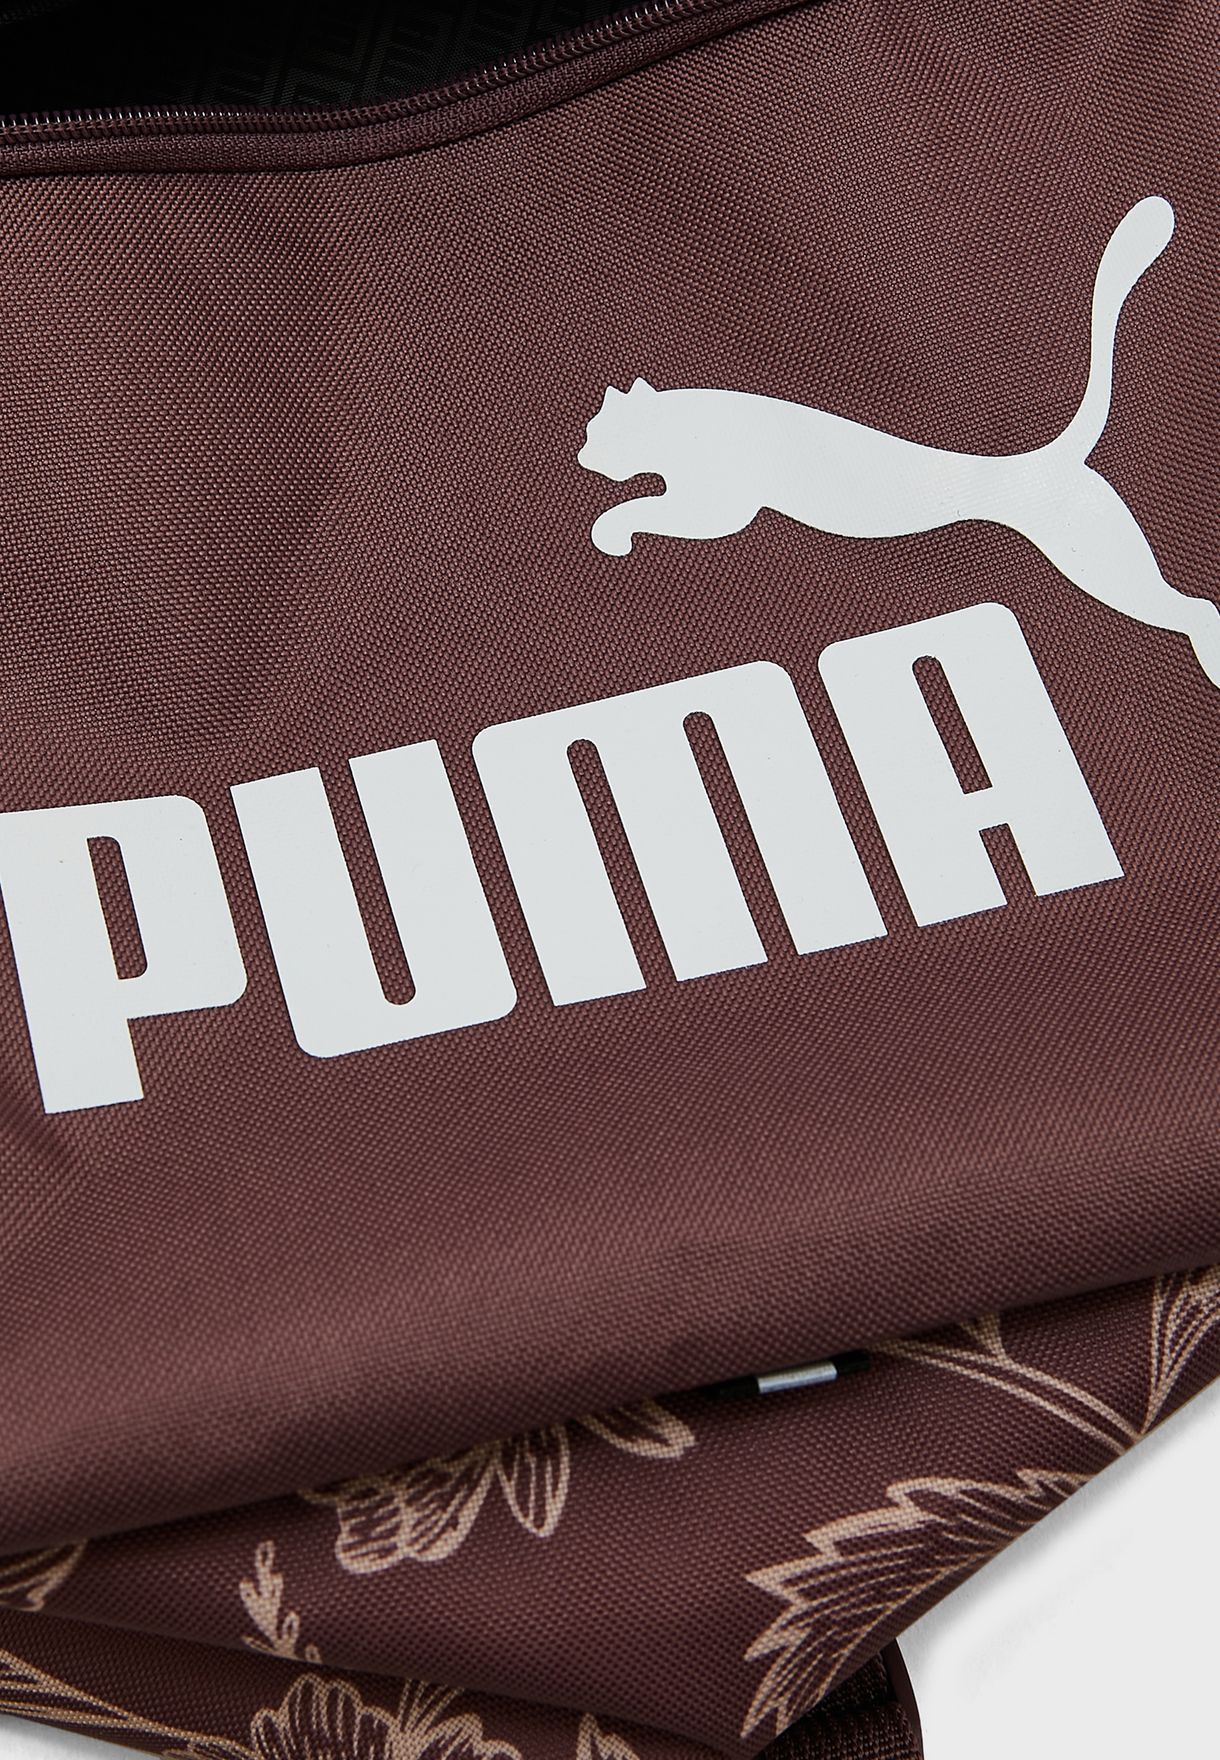 Puma Phase Men Backpack